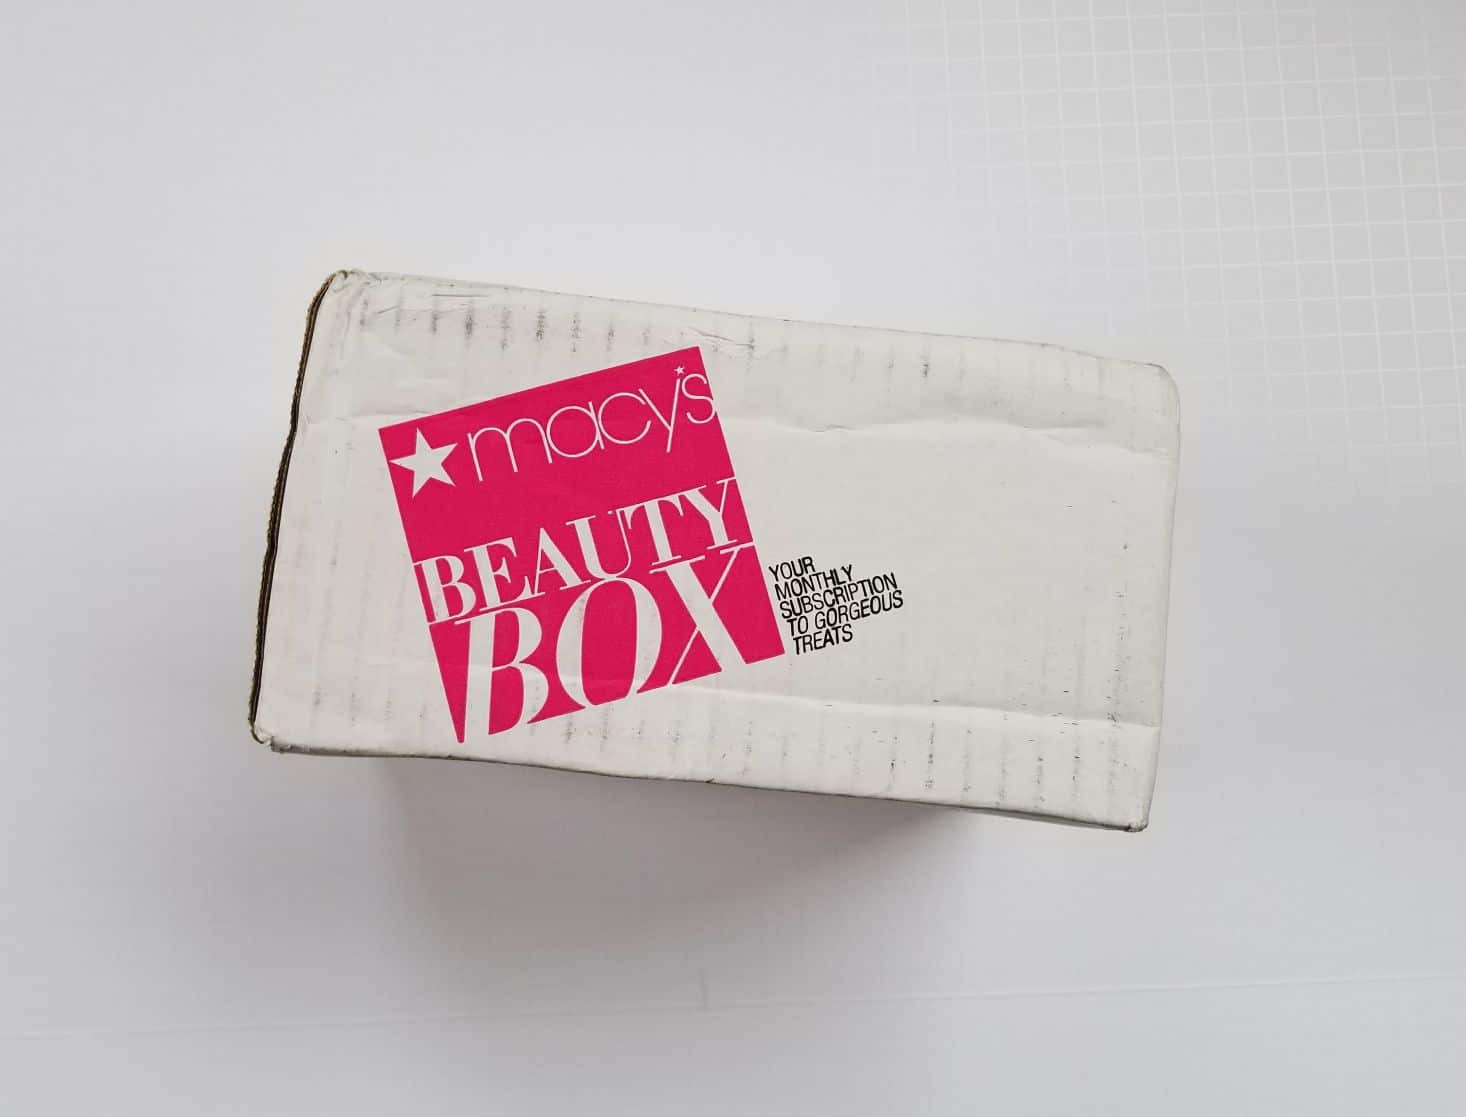 Macy’s Beauty Box October 2021 Spoilers